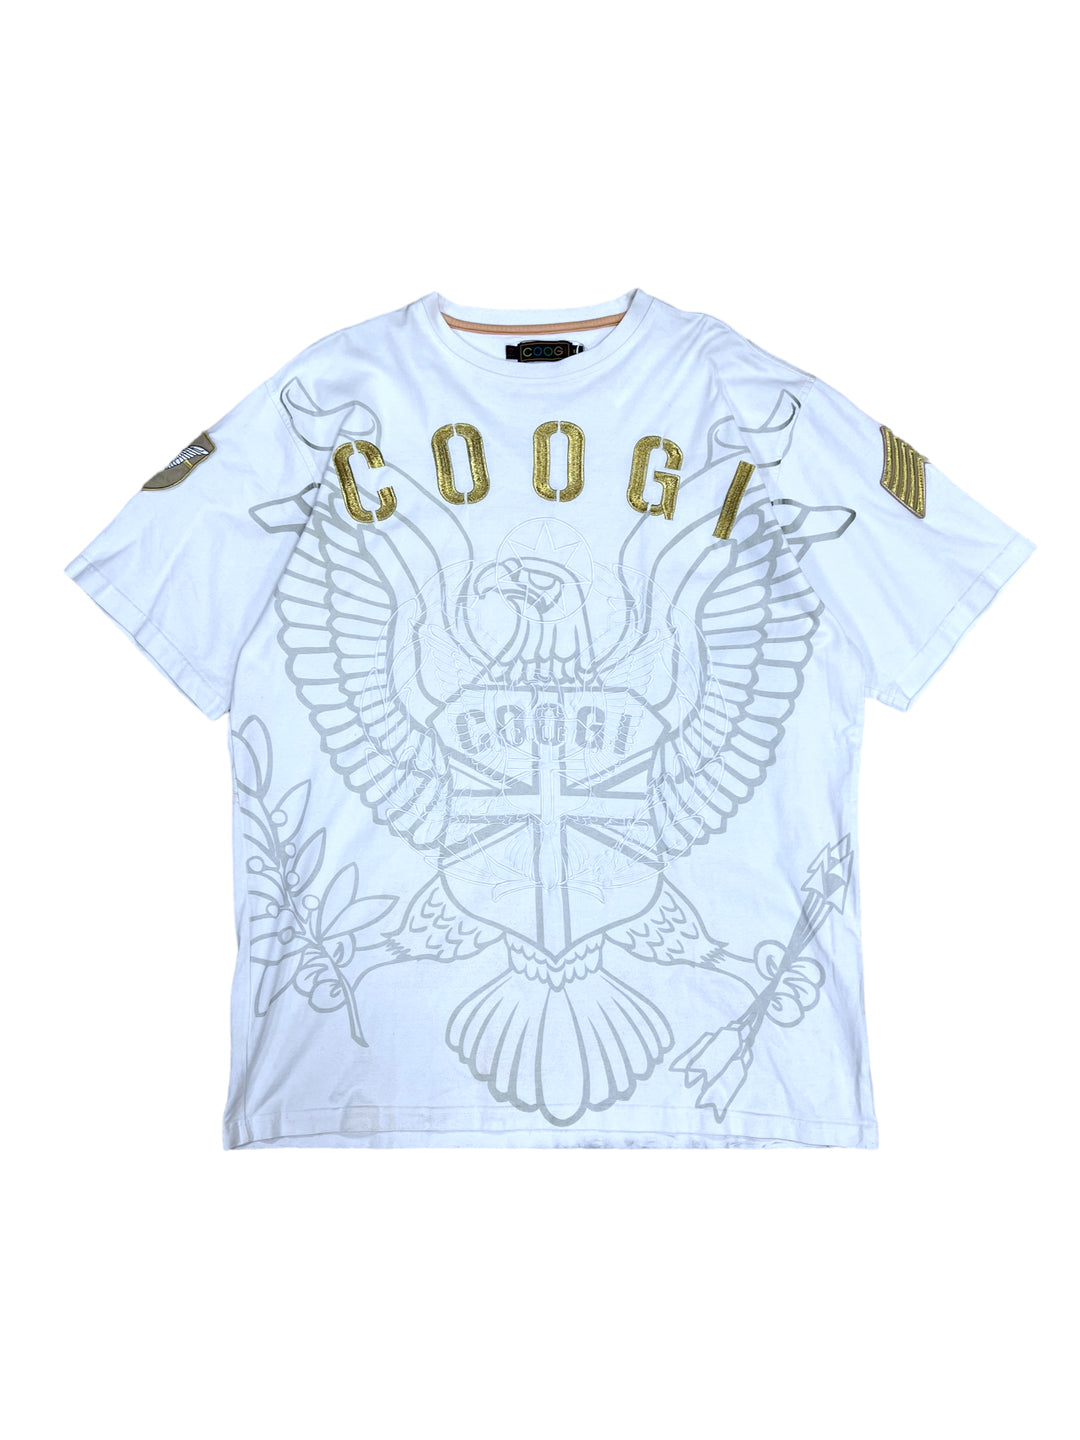 Coogi Vintage T-shirt Men's XXL